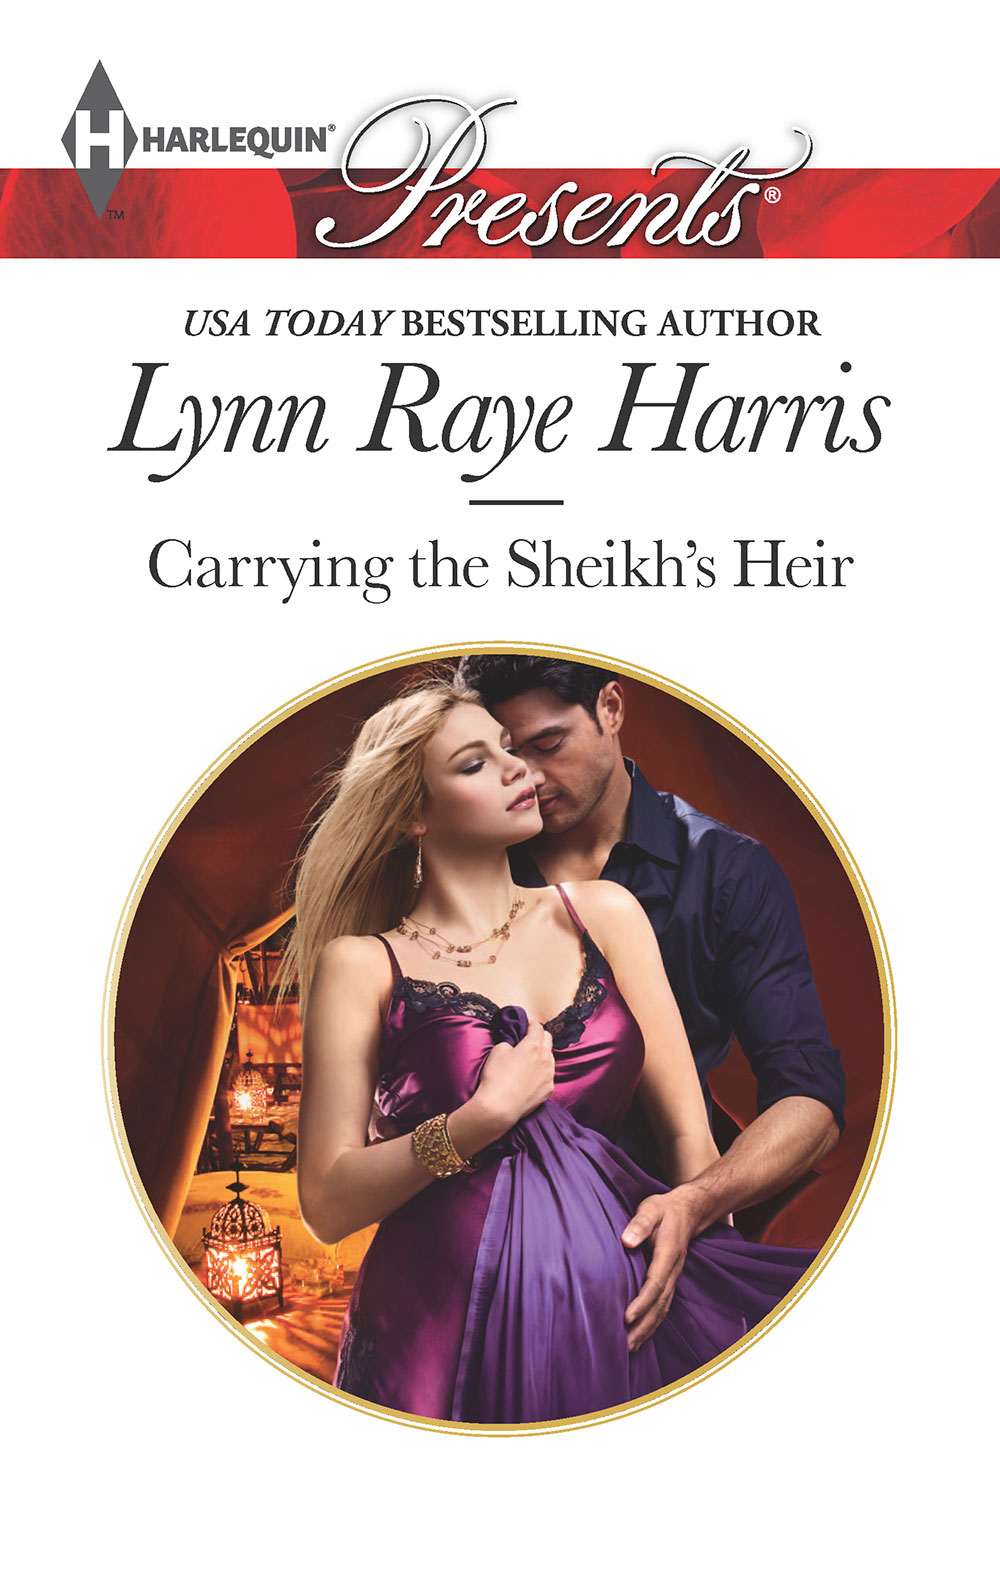 harlequin romance novels free download pdf